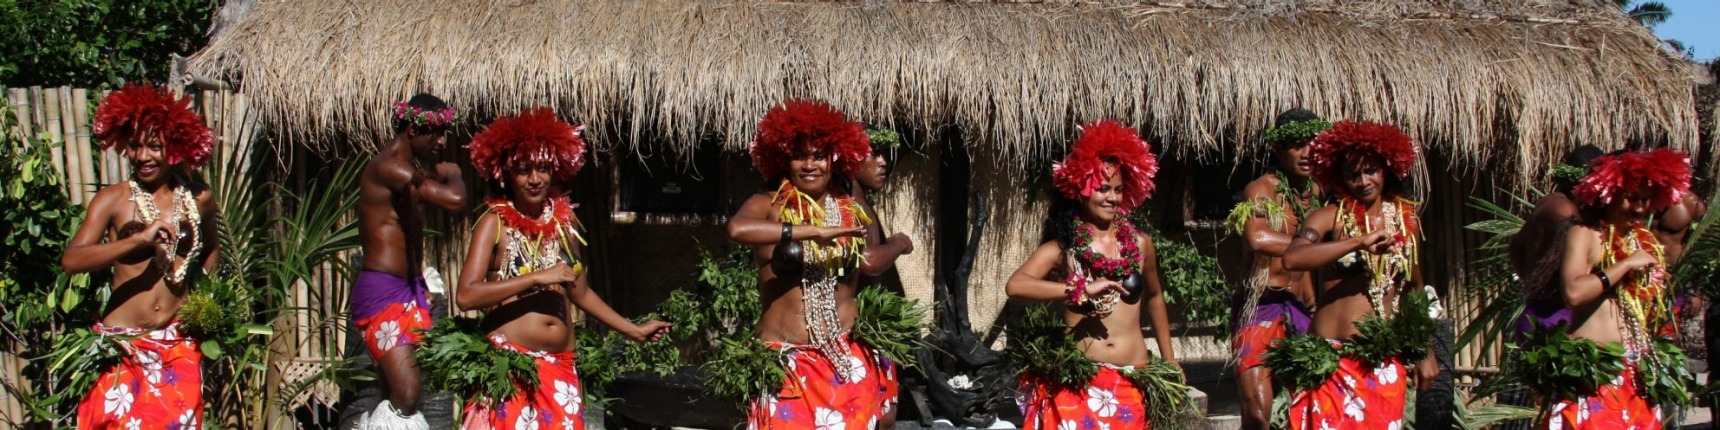 Fiji, dance